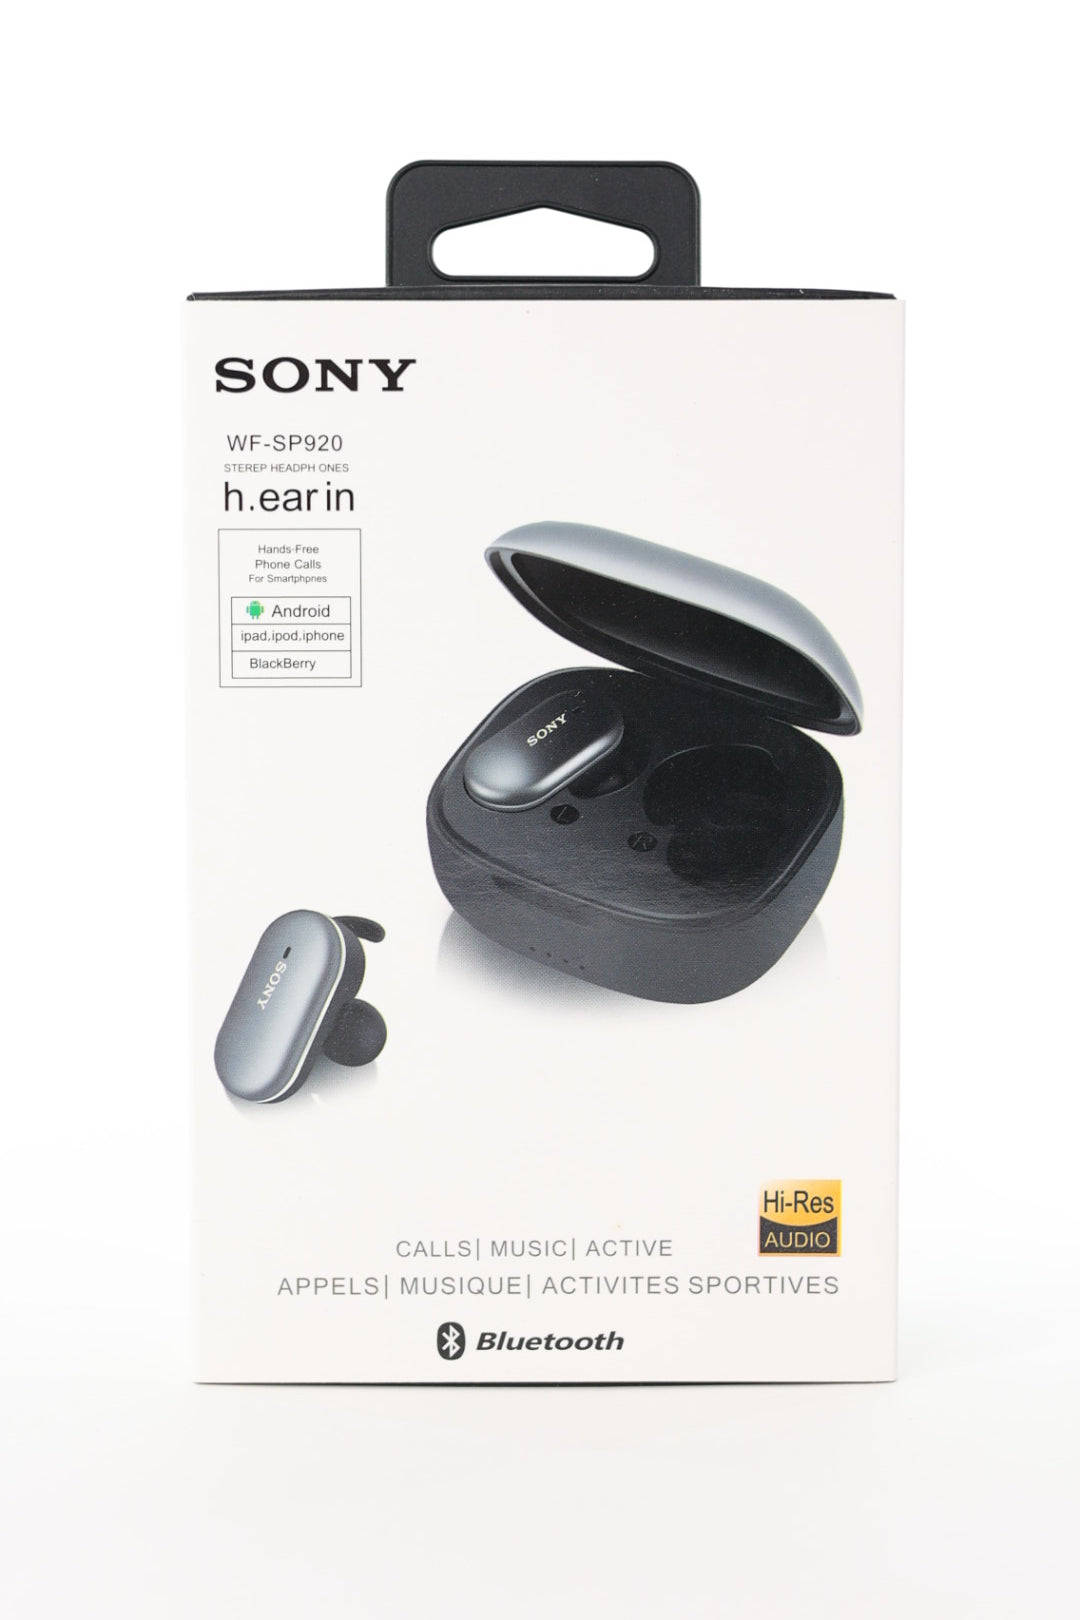 Sony Headphones, Stereo, Black